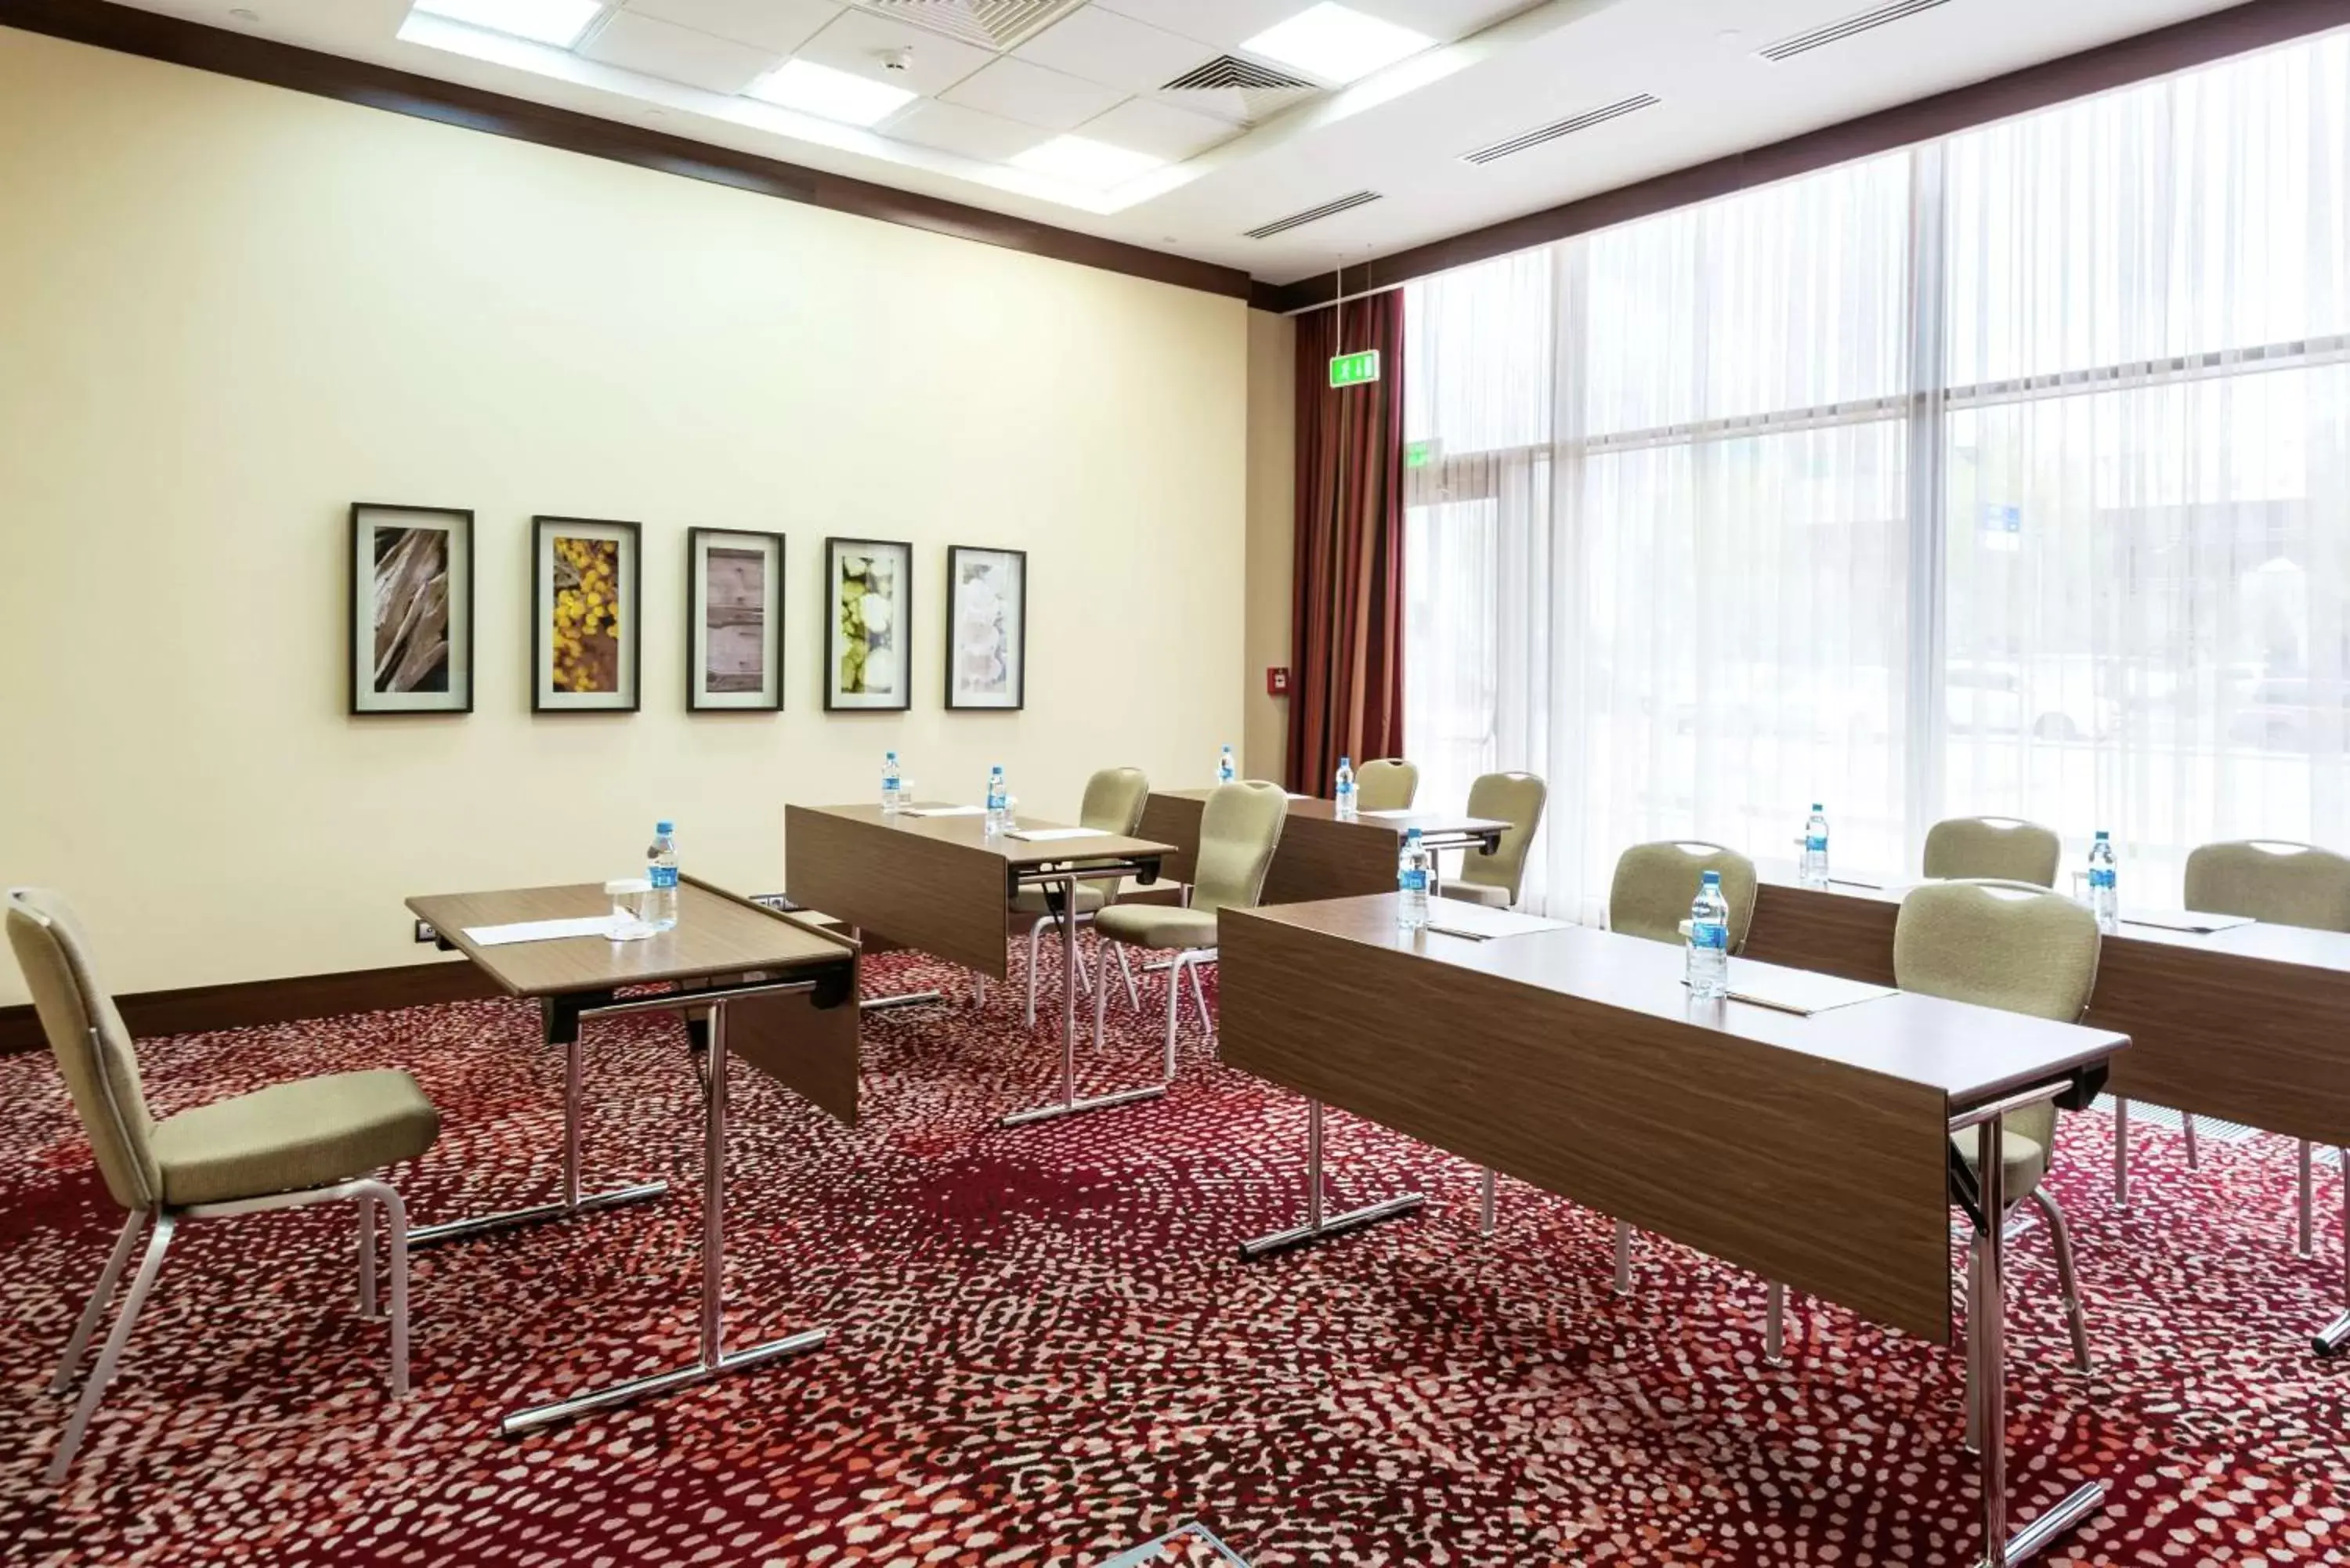 Meeting/conference room in Hilton Garden Inn Astana